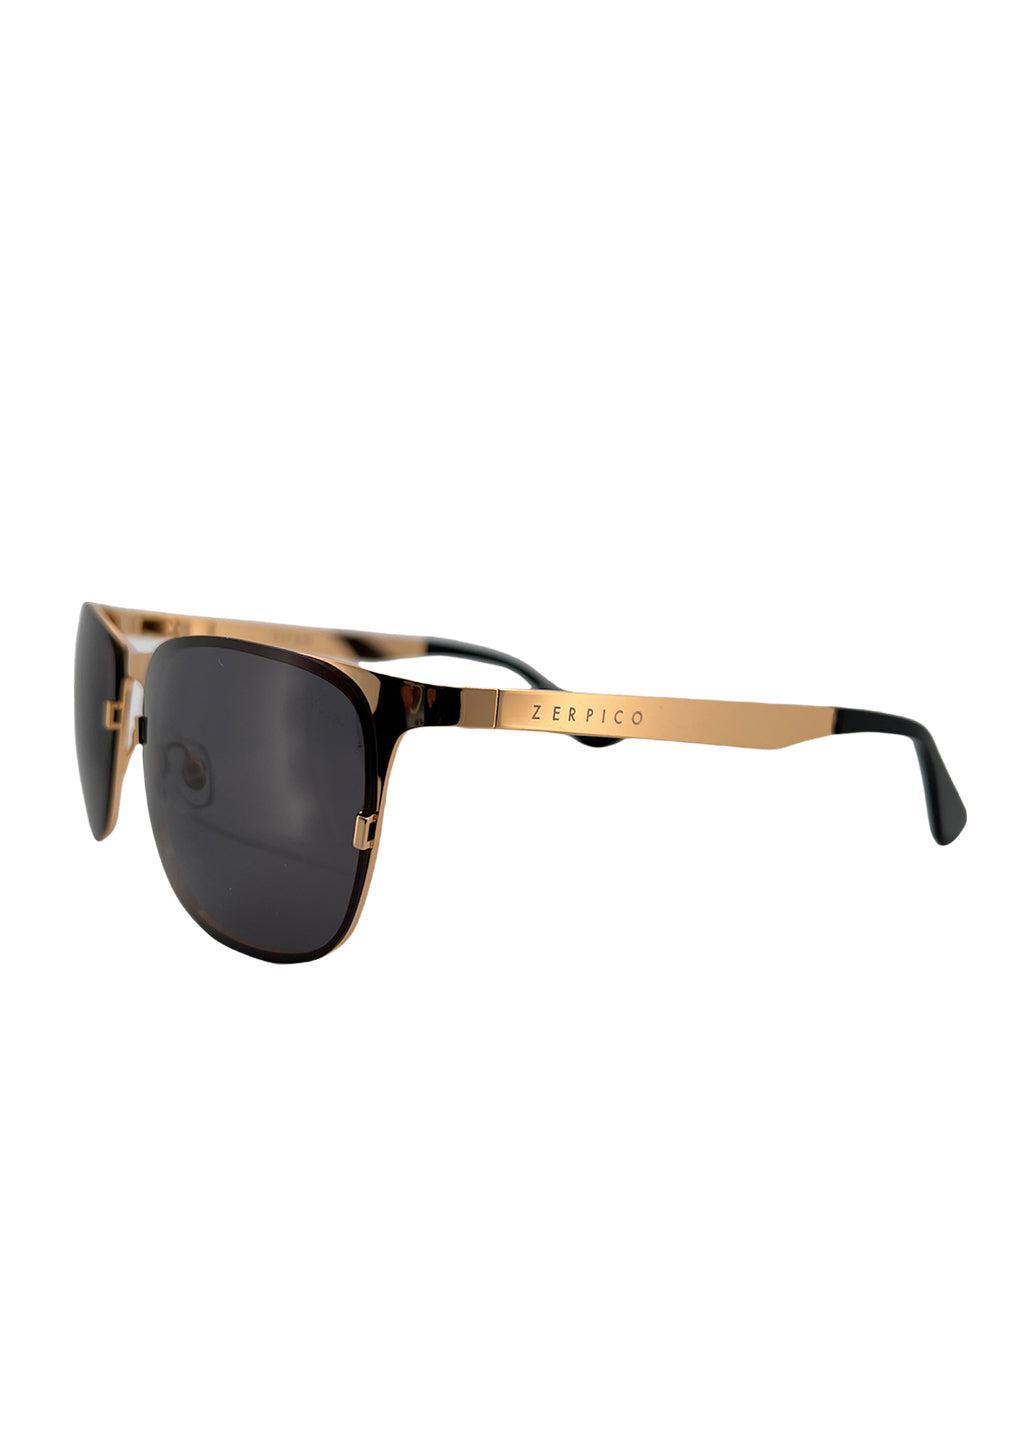 Titanium Wayfarer Sunglasses - V2 - 24K GOLD Plated-12